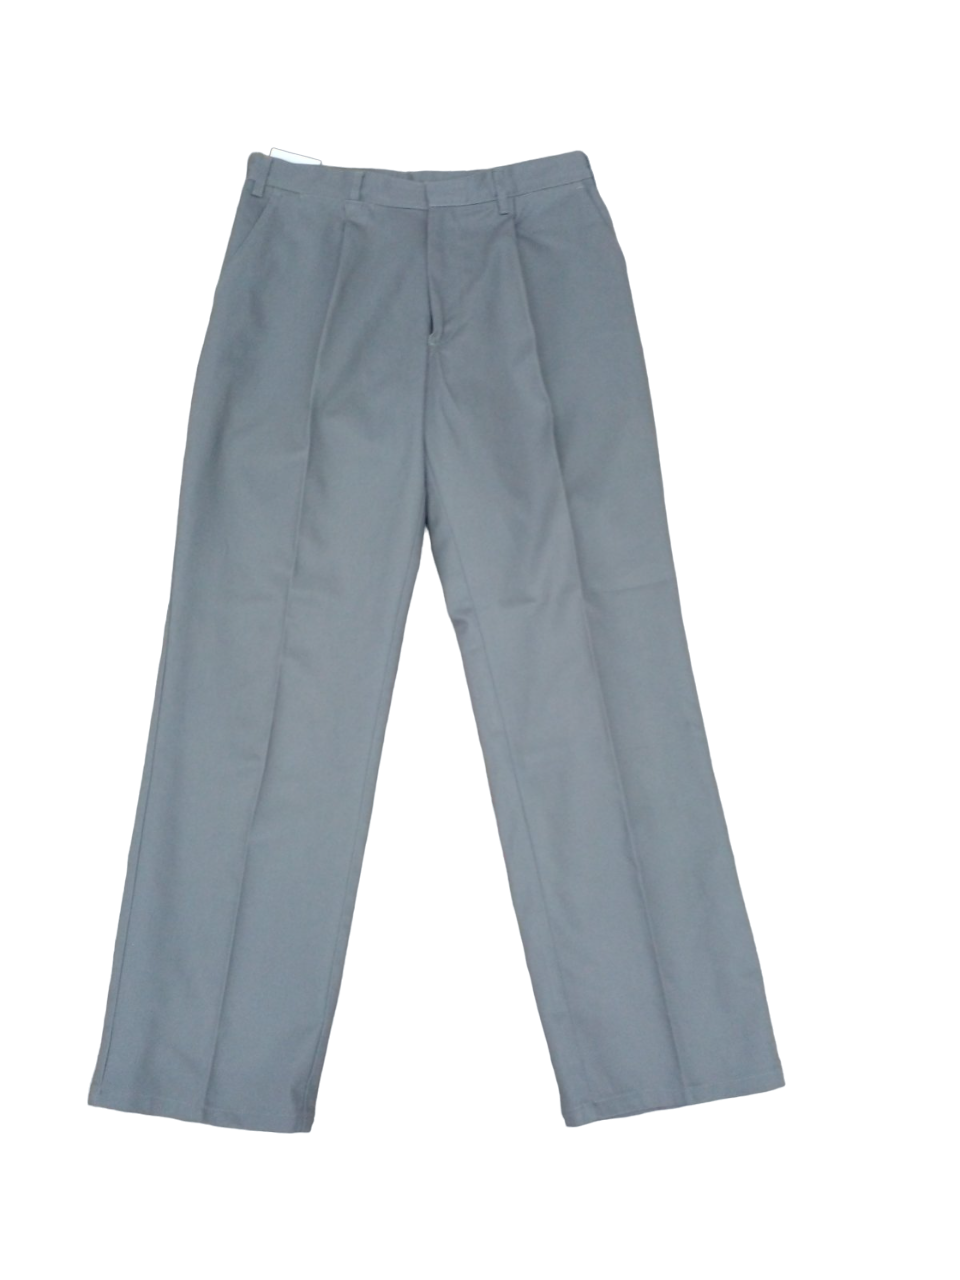 STY020 Single Pleat Work Trouser - RG Direct Online Store